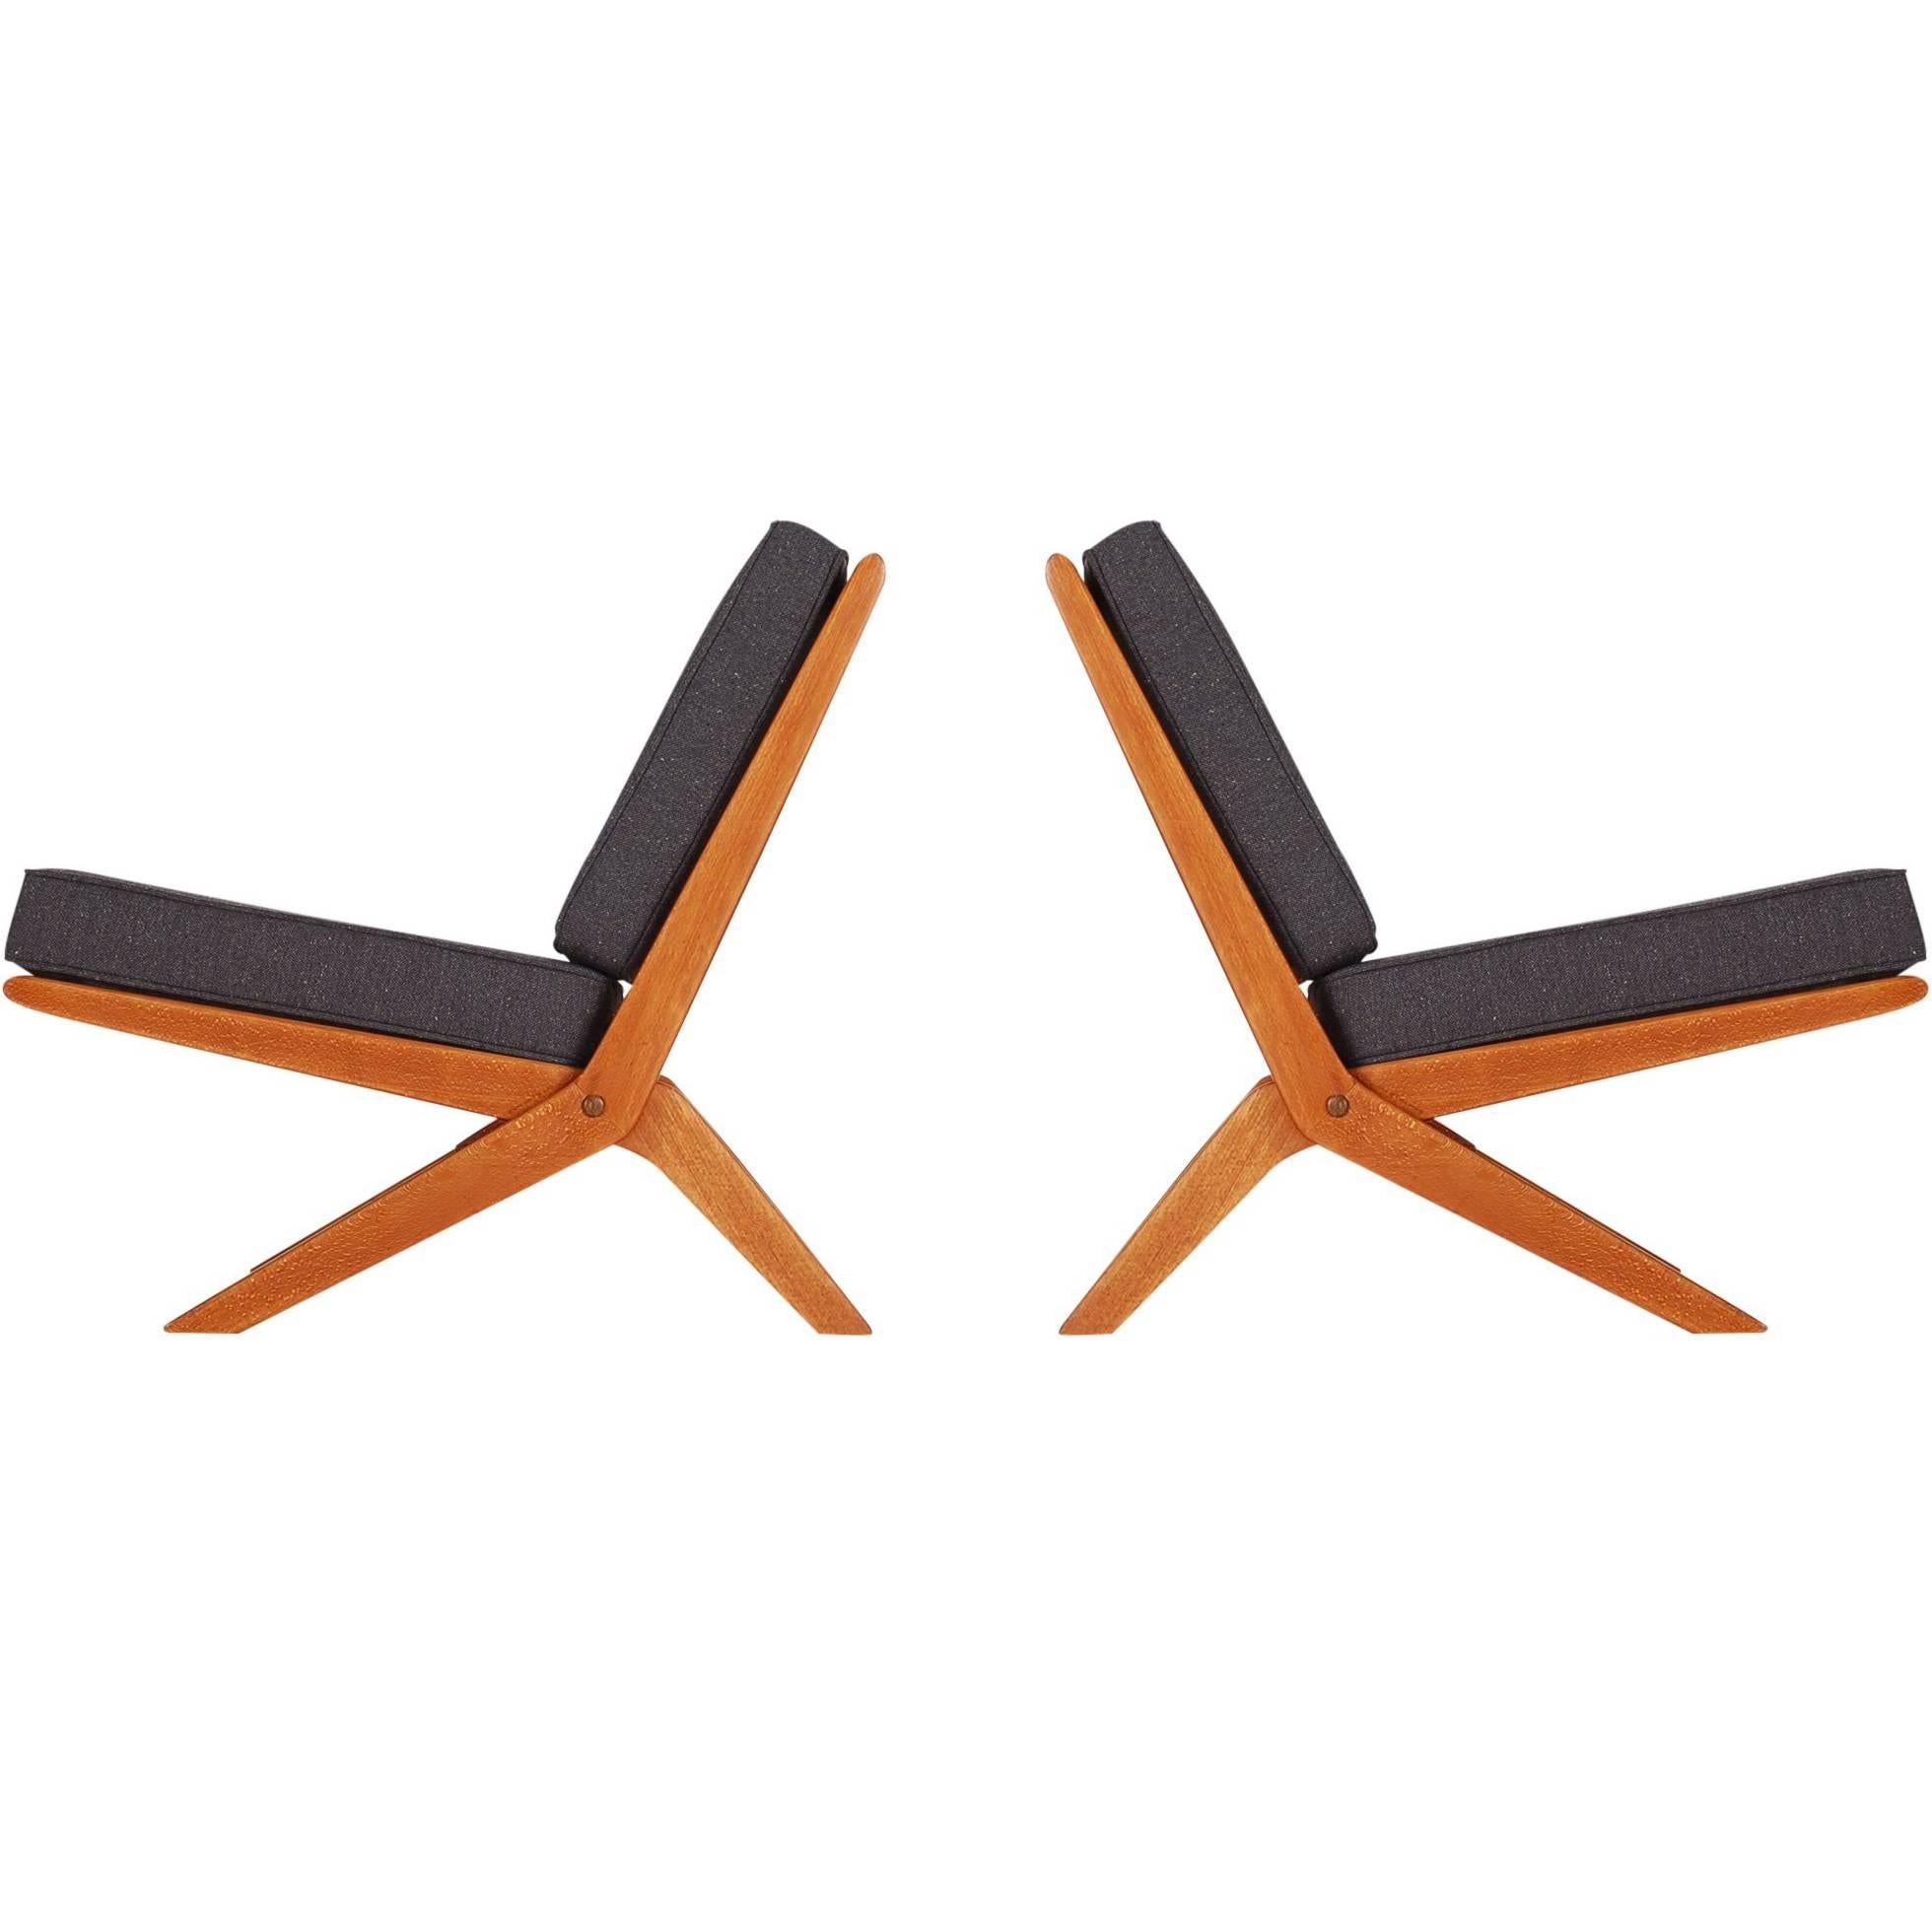 Pair of Midcentury Danish Modern Slipper Lounge Chairs by Peter Hvidt